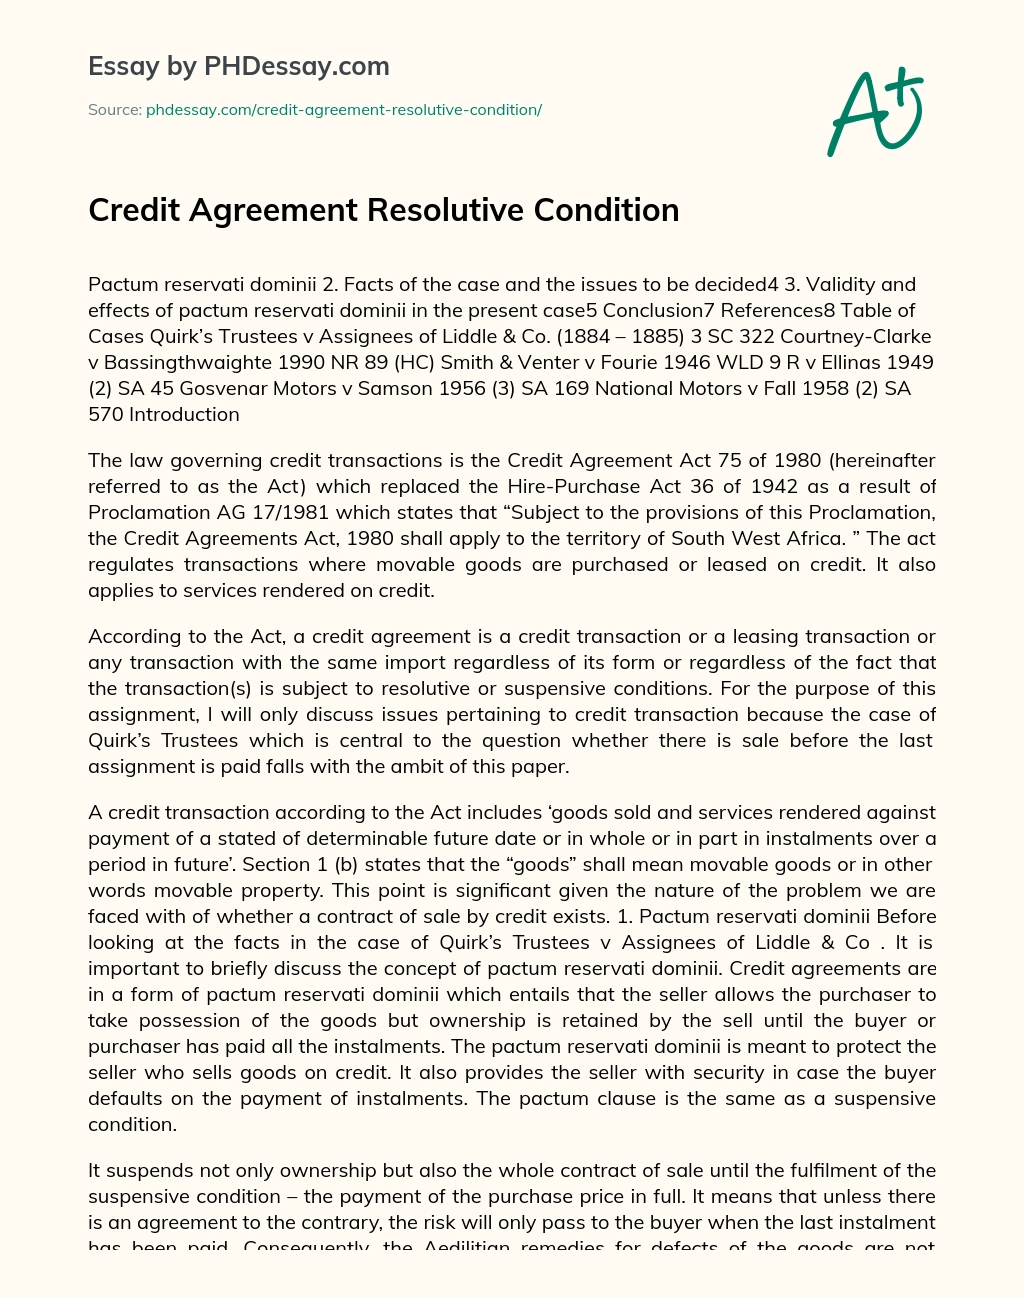 Credit Agreement Resolutive Condition essay